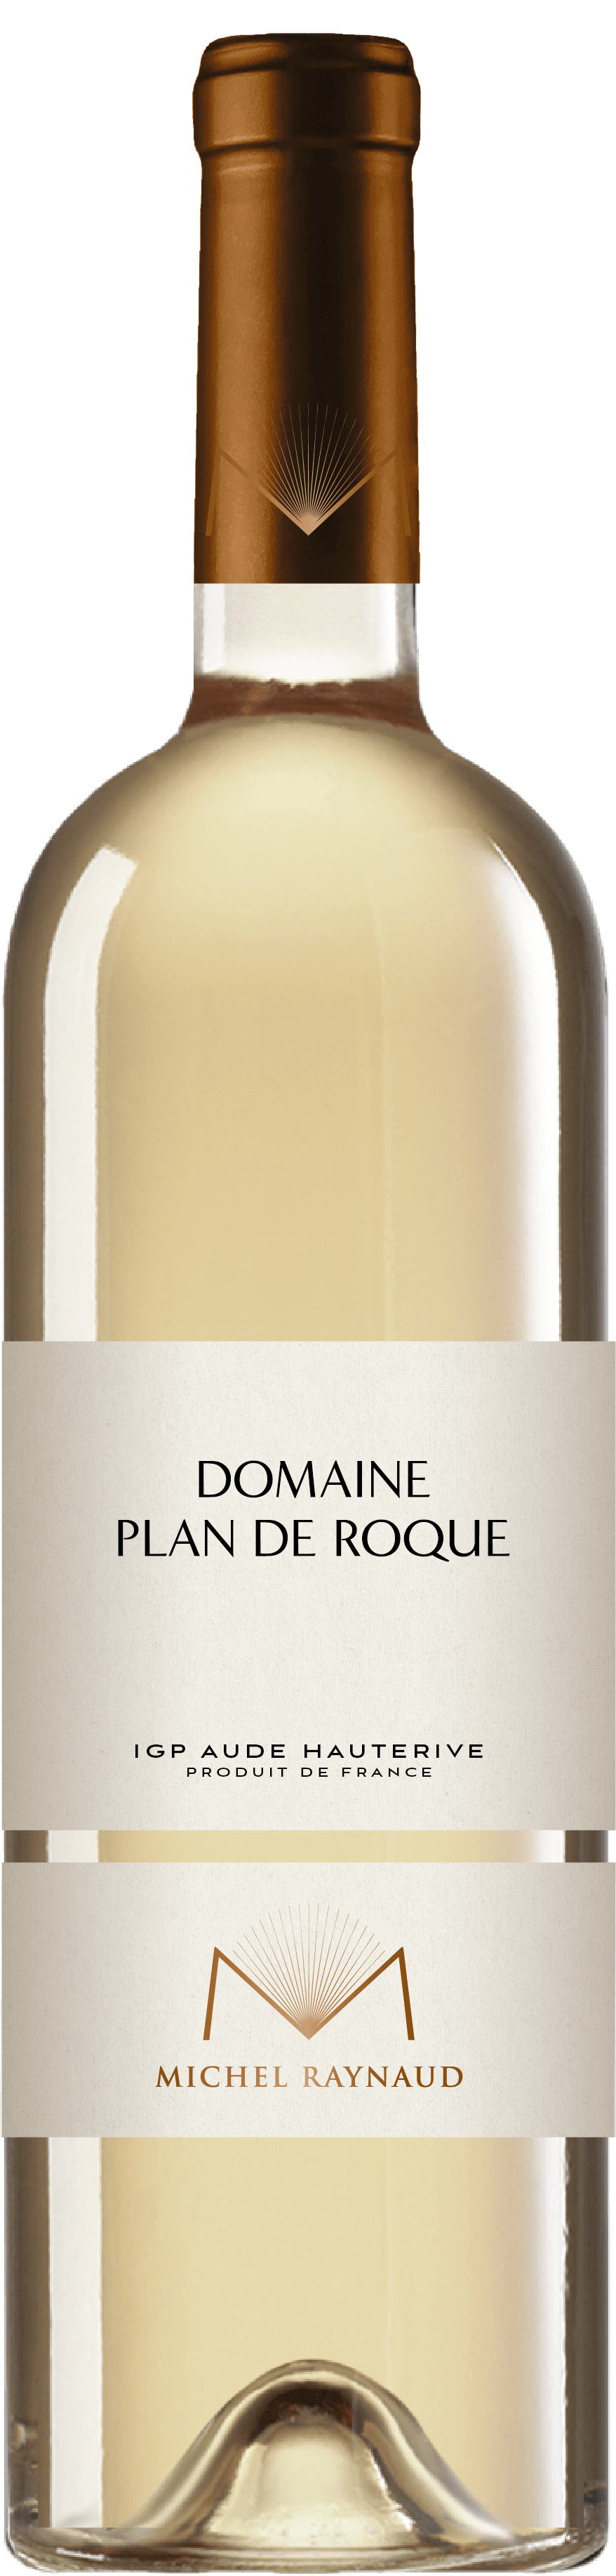 Tirébouché – Red Vin de France - Michel Raynaud